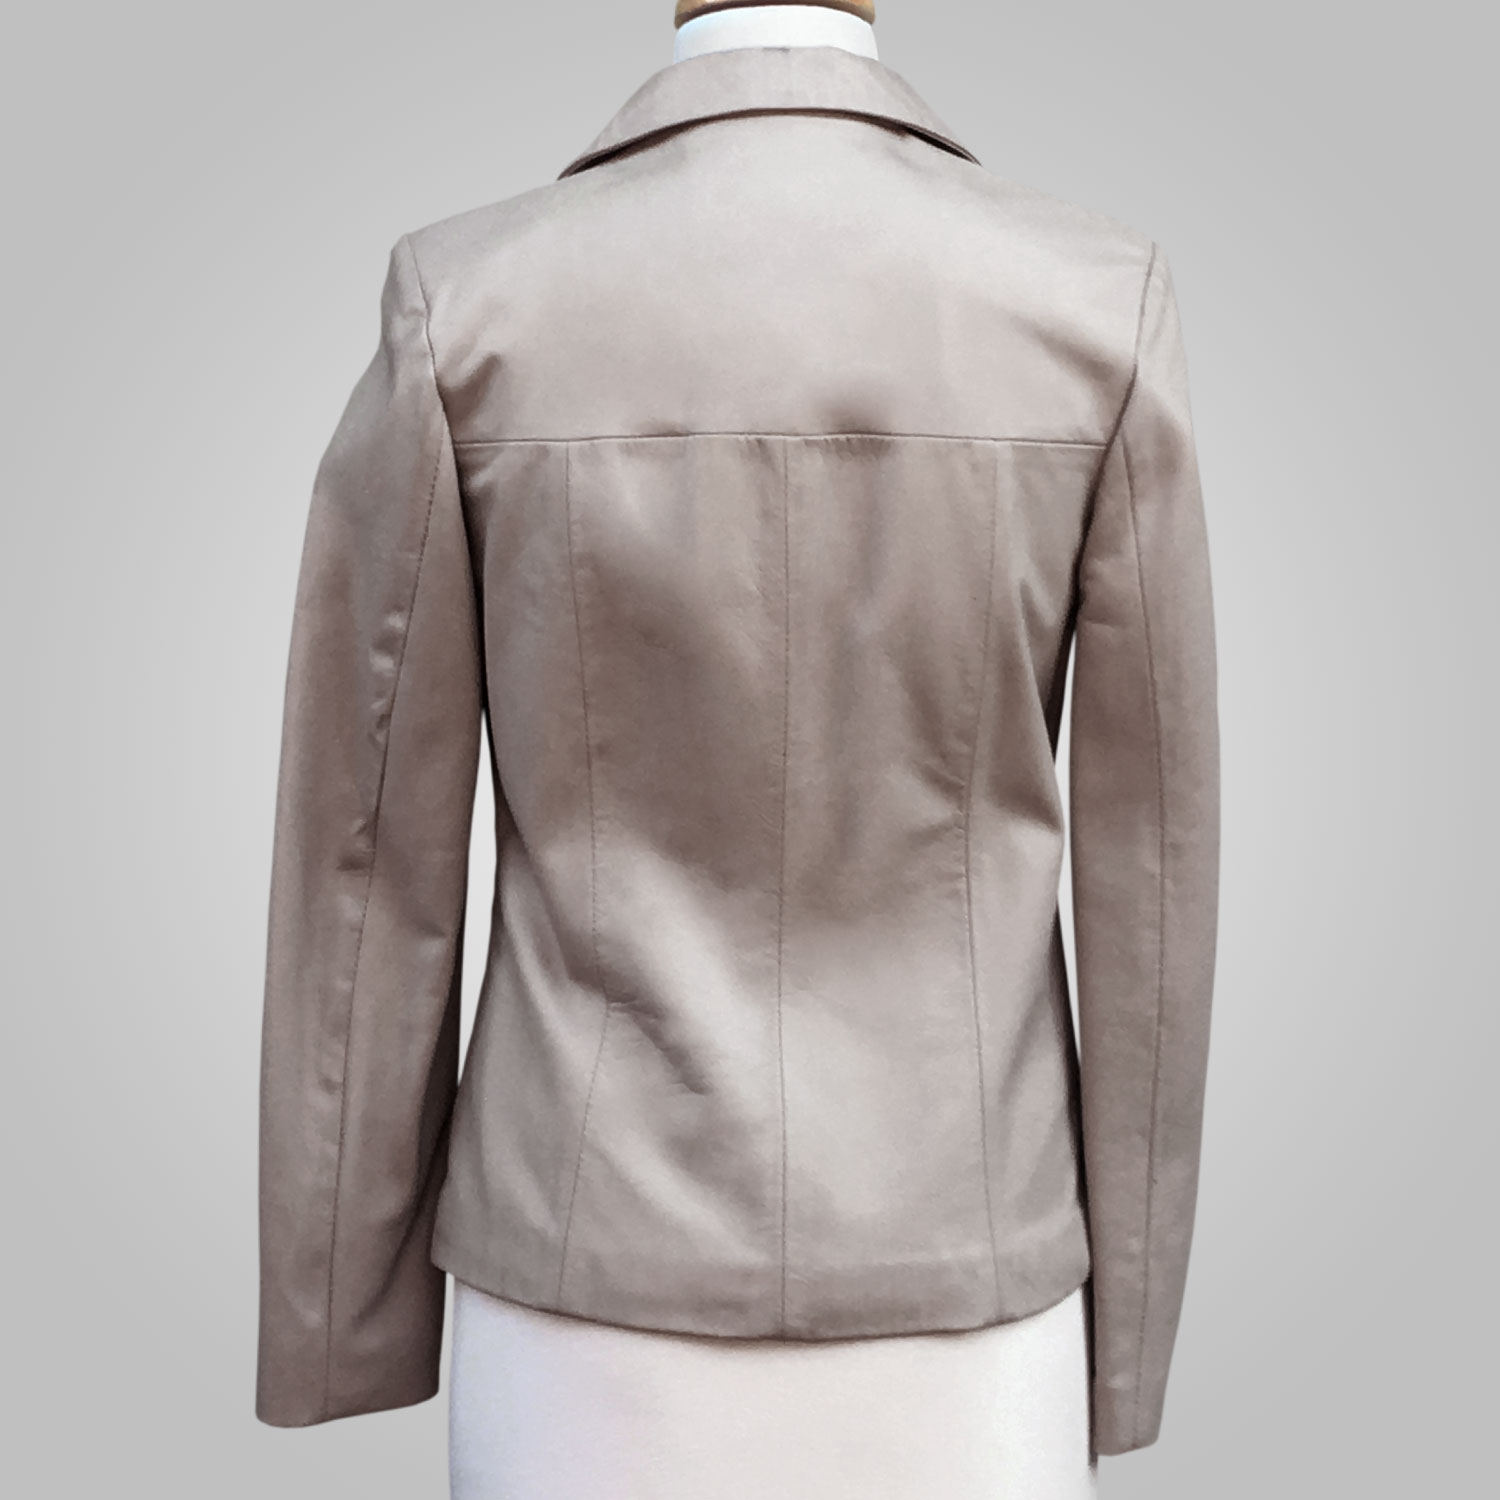 Cream Leather Jacket - Cream Lynda 003 - L'Aurore Leather Jacket